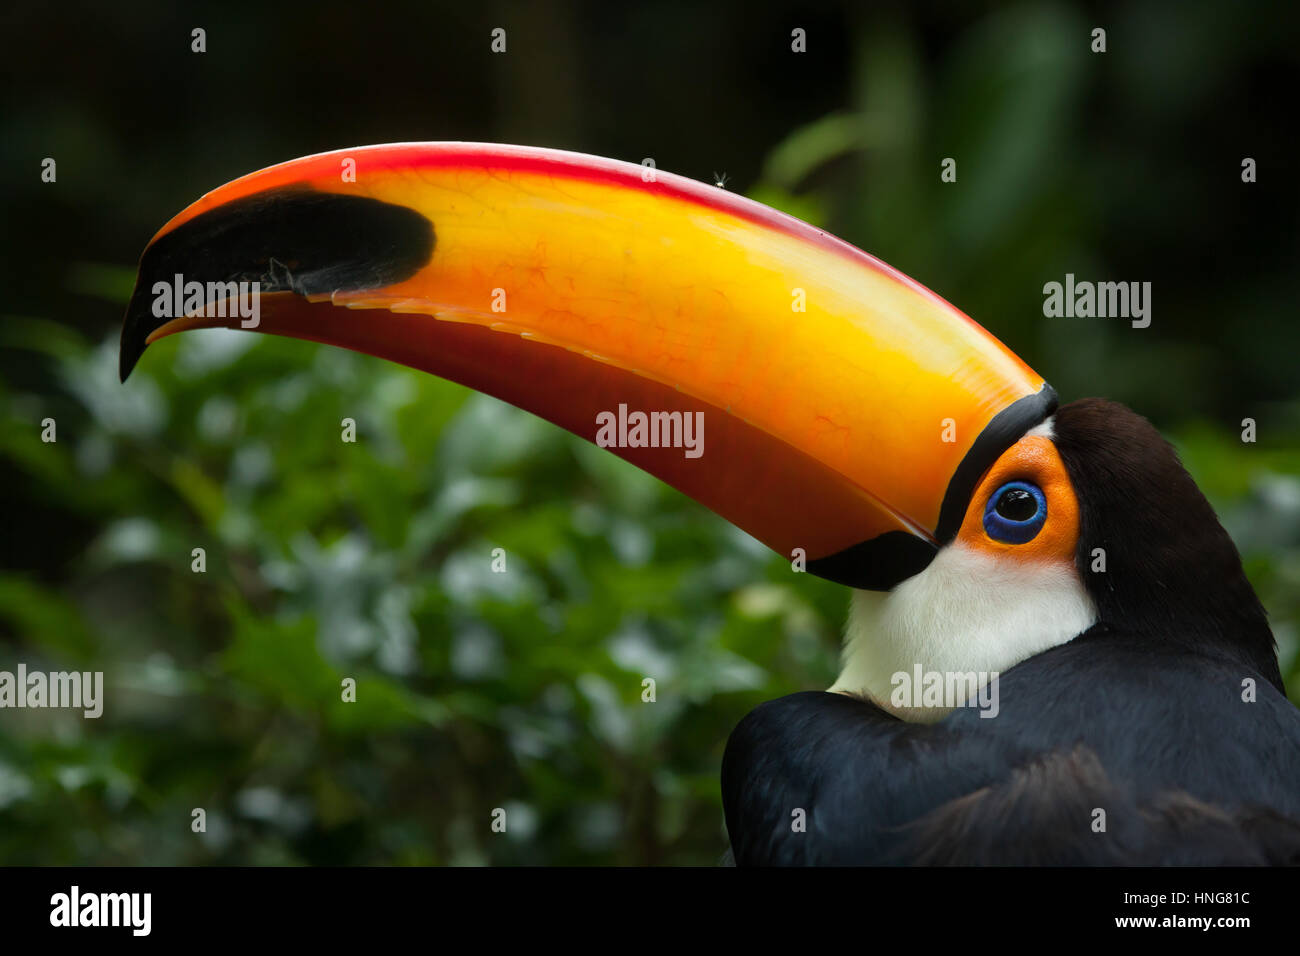 Toco toucan (Ramphastos toco), also known as the common toucan or simply toucan. Stock Photo